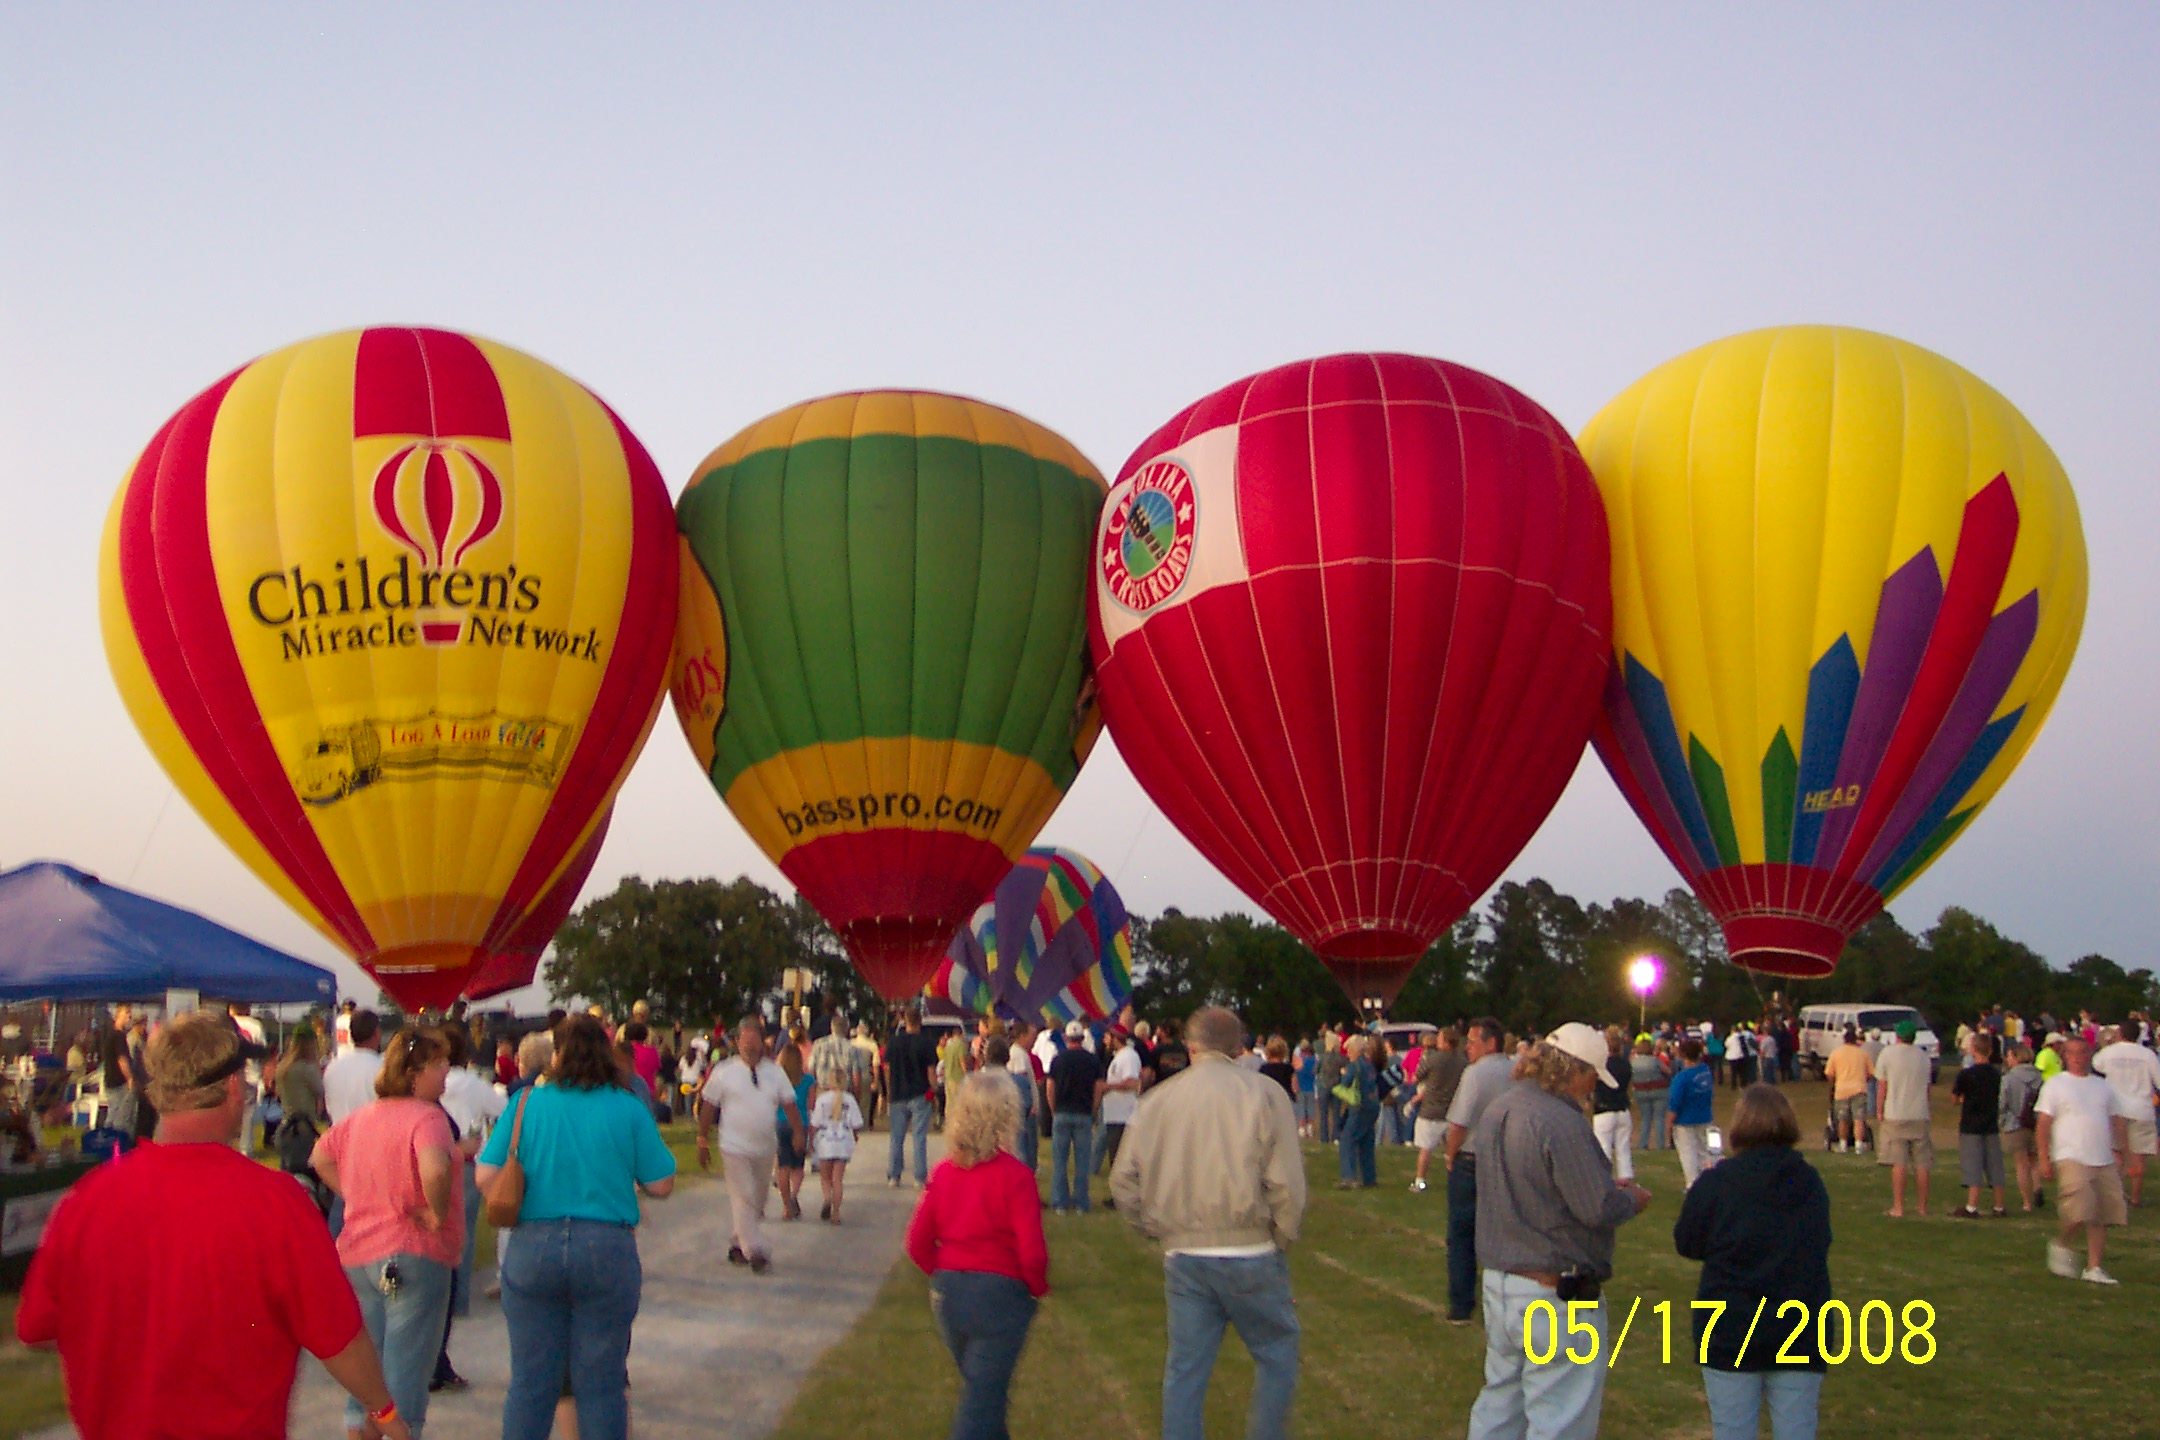 Balloon Festival for Children's Miracle Network